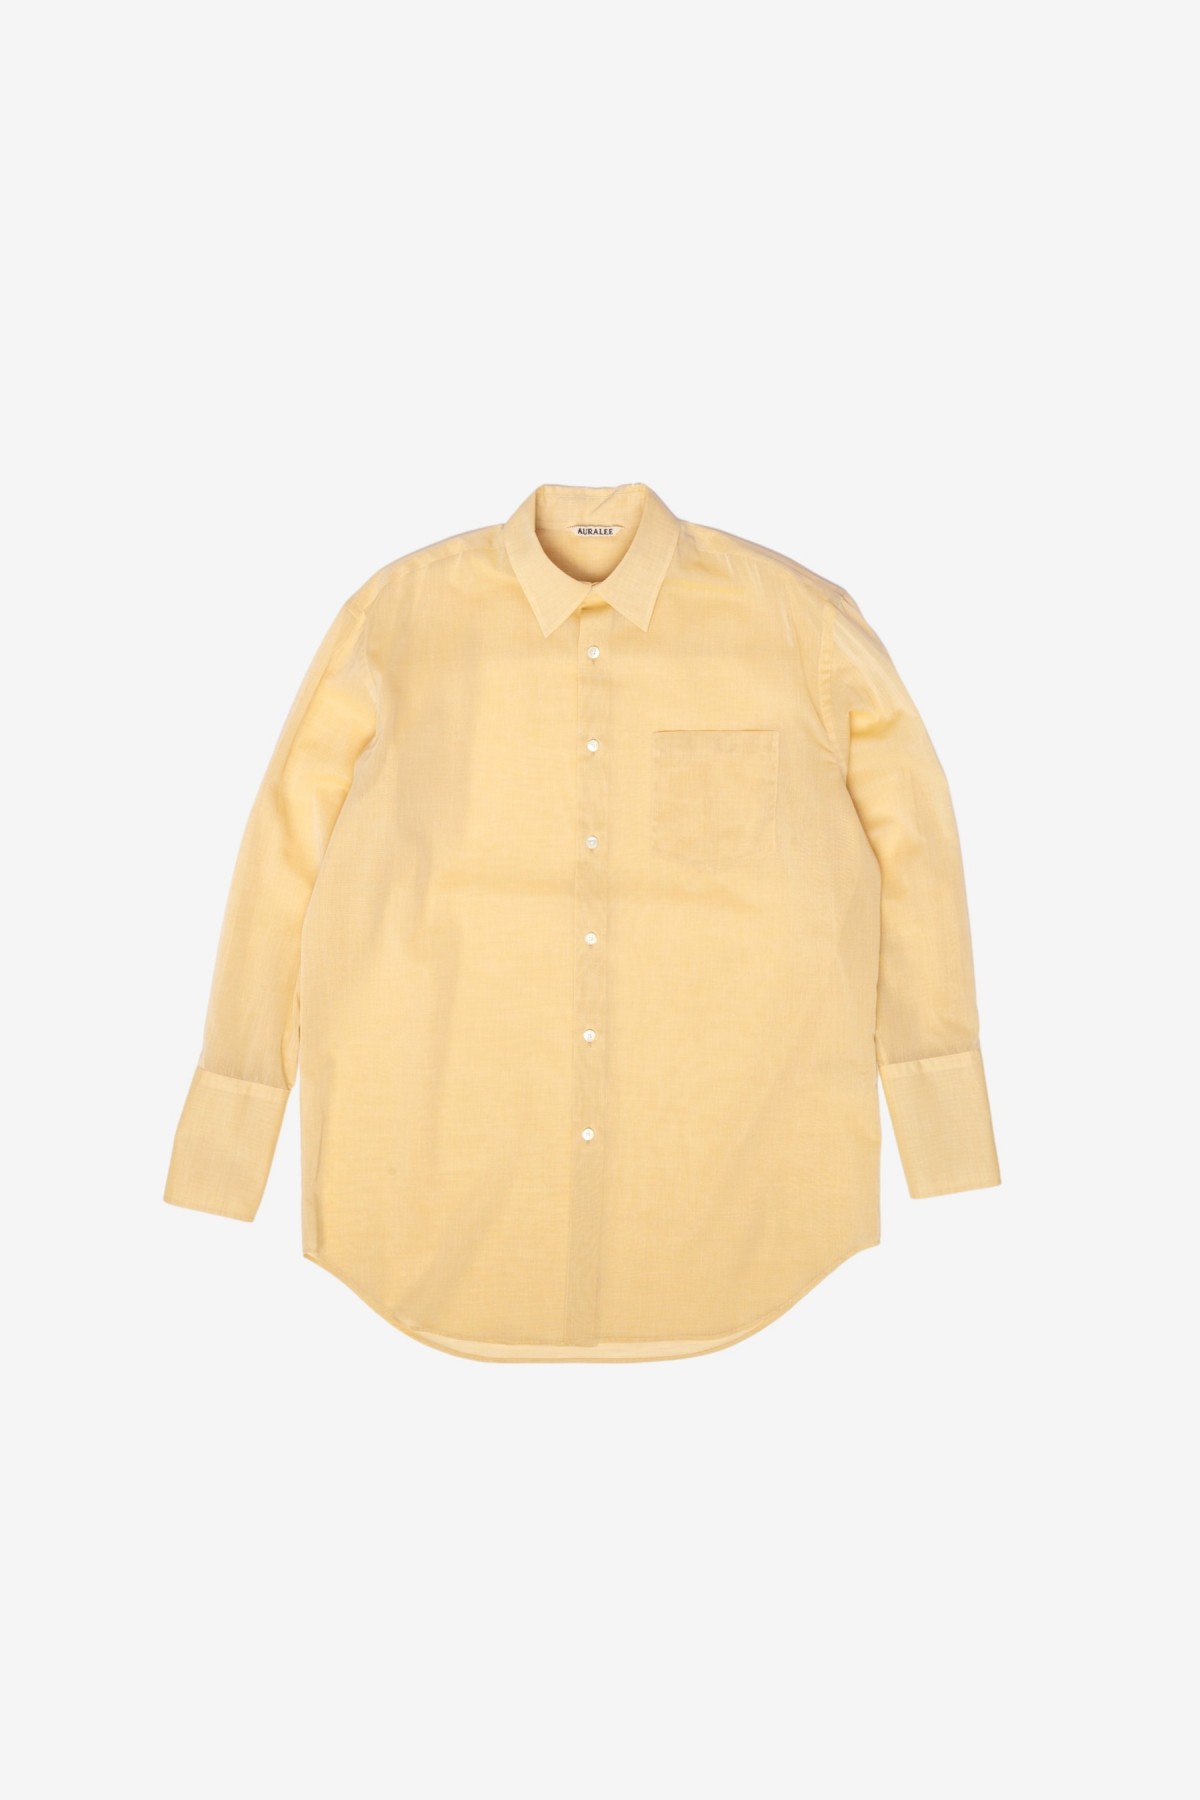 Auralee Hard Twist Finx Organdy Shirt in Light Yellow Chambray